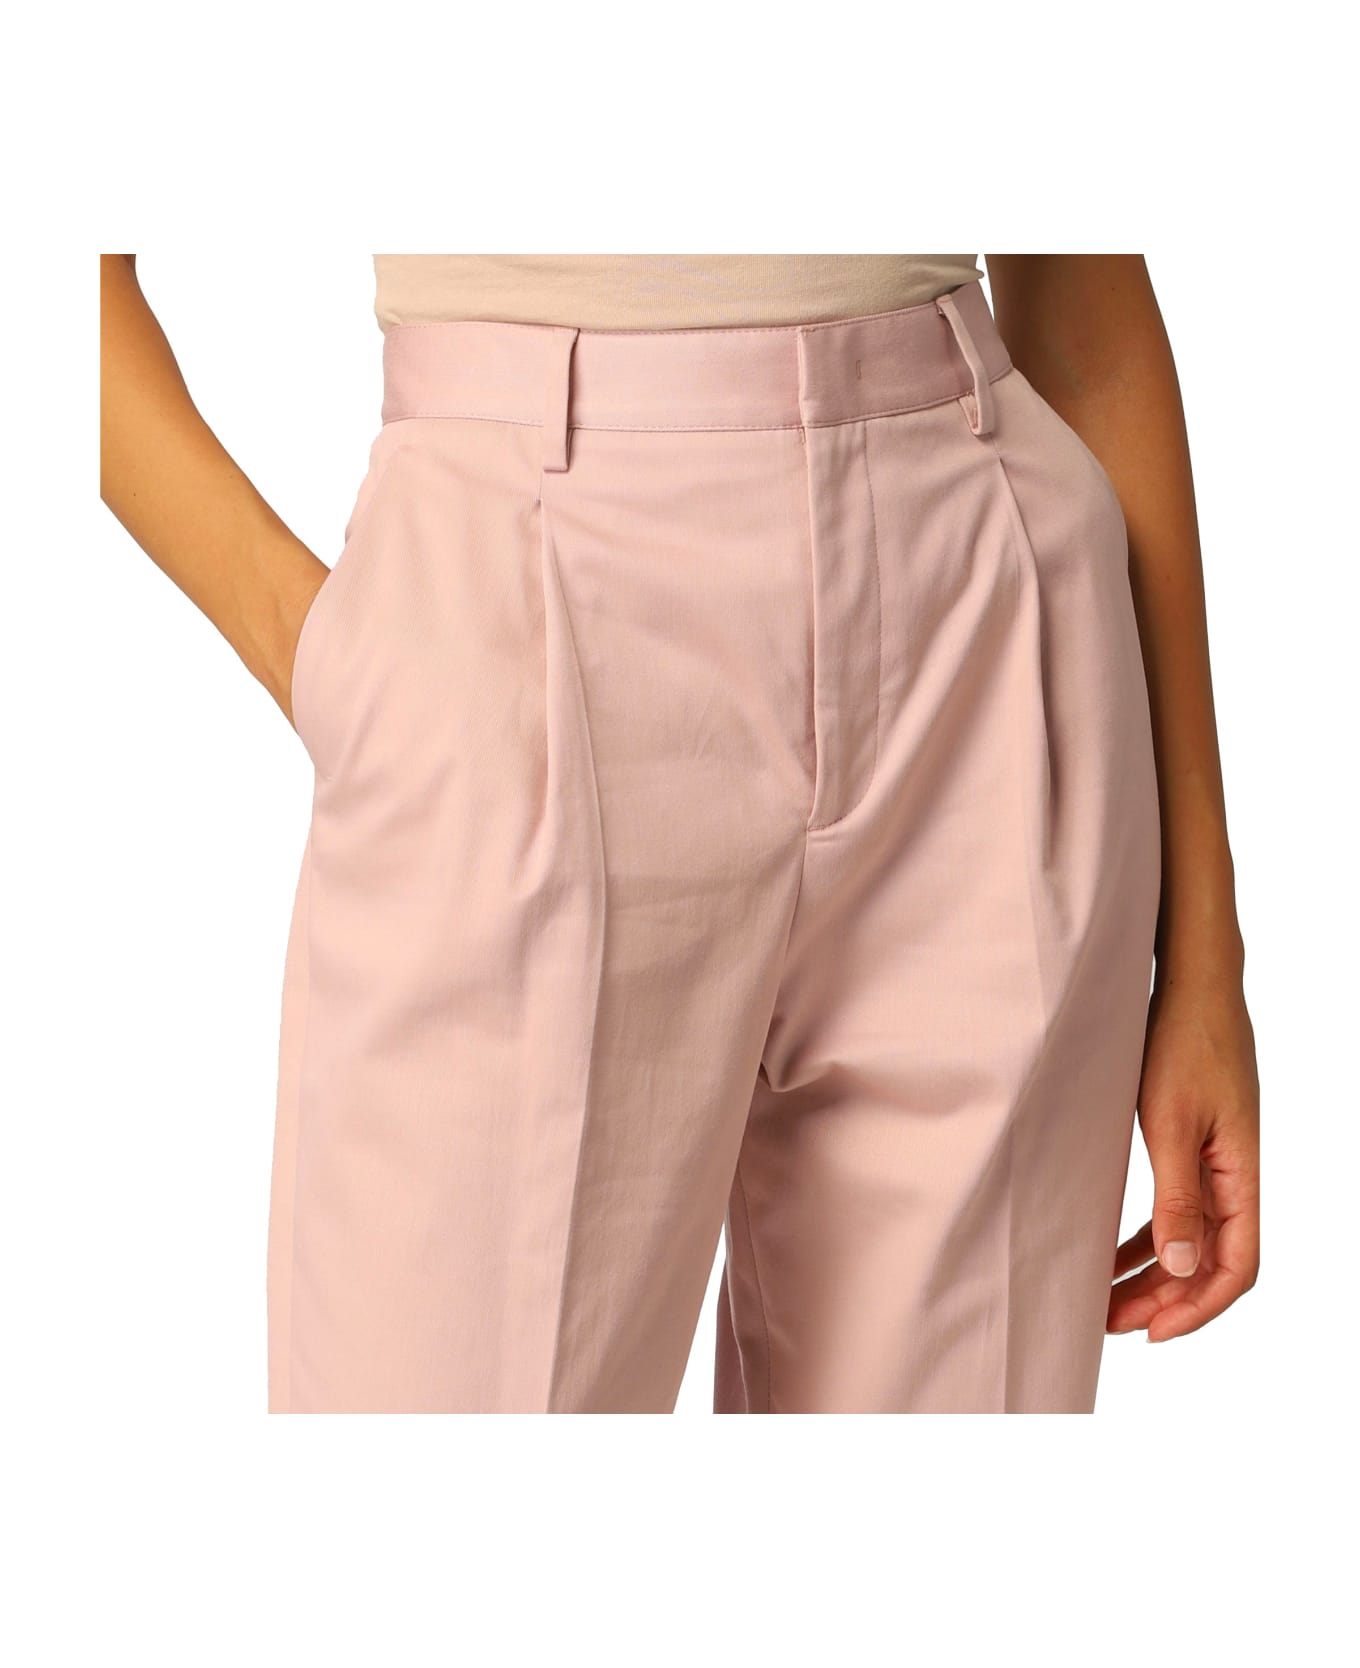 Valentino High Waist Trousers - Pink